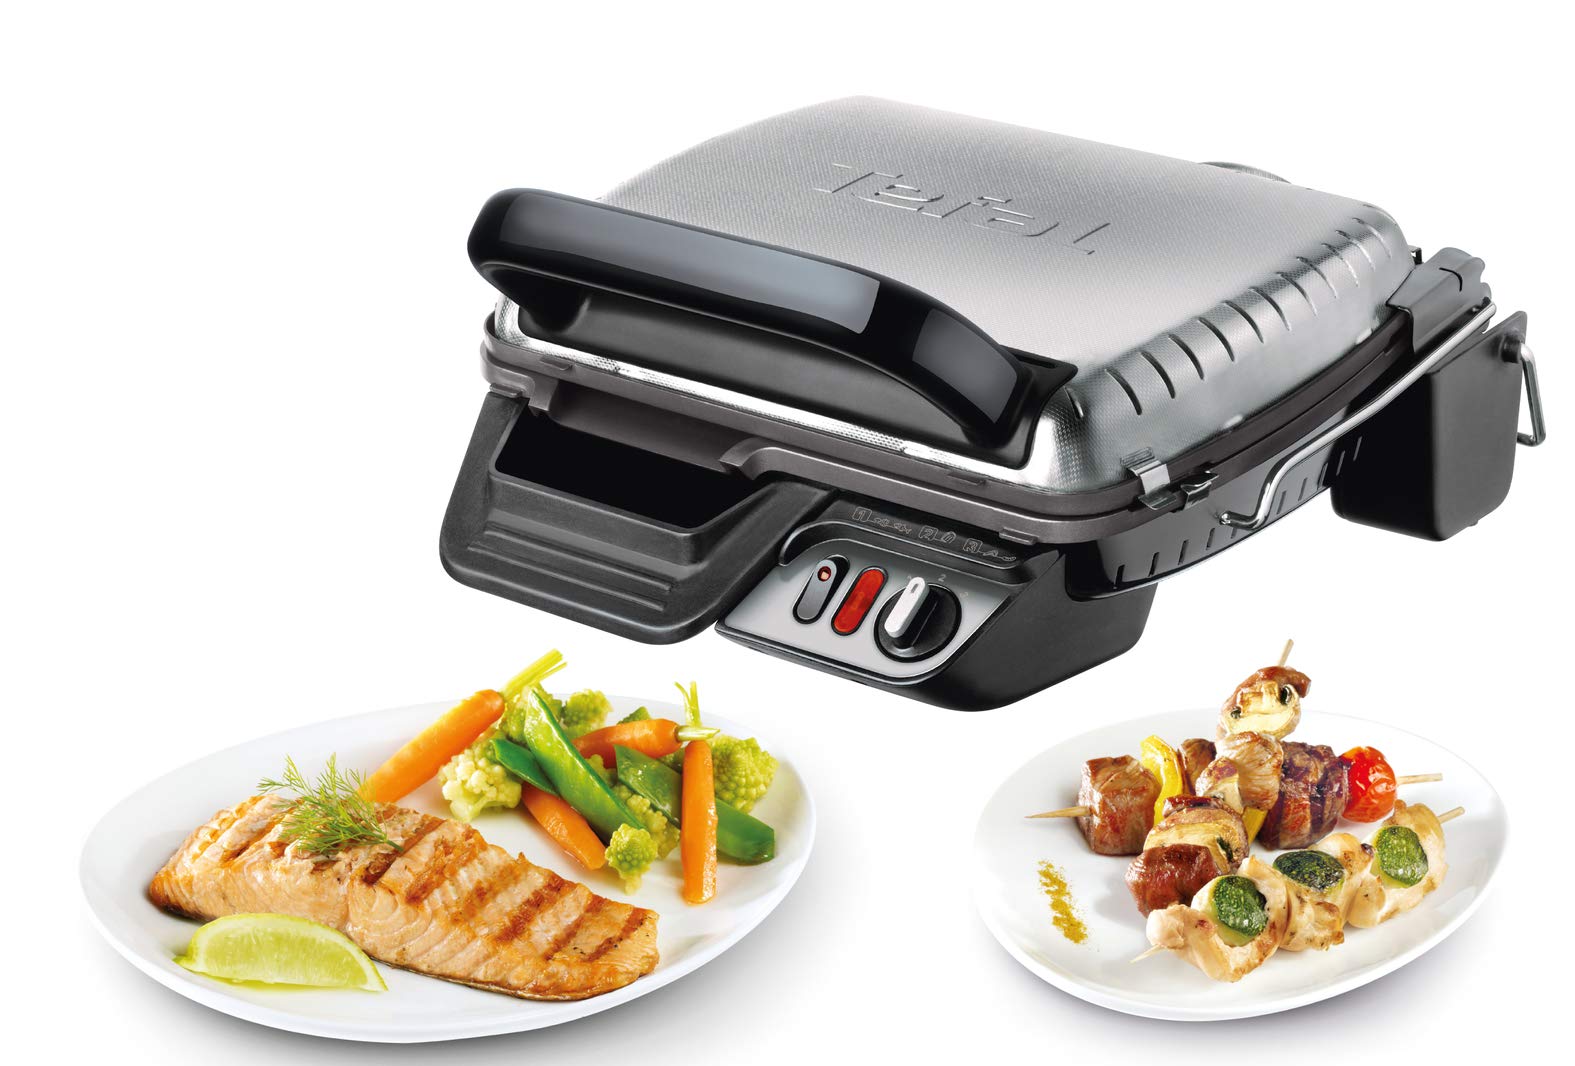 Tefal Sandwich maker, Ultra compact grill, 1 year warranty شواية كهربائية صغيرة مضغوطة الترا كومباكت 2000 واط ستانلس ستيل من تيفال، اسود